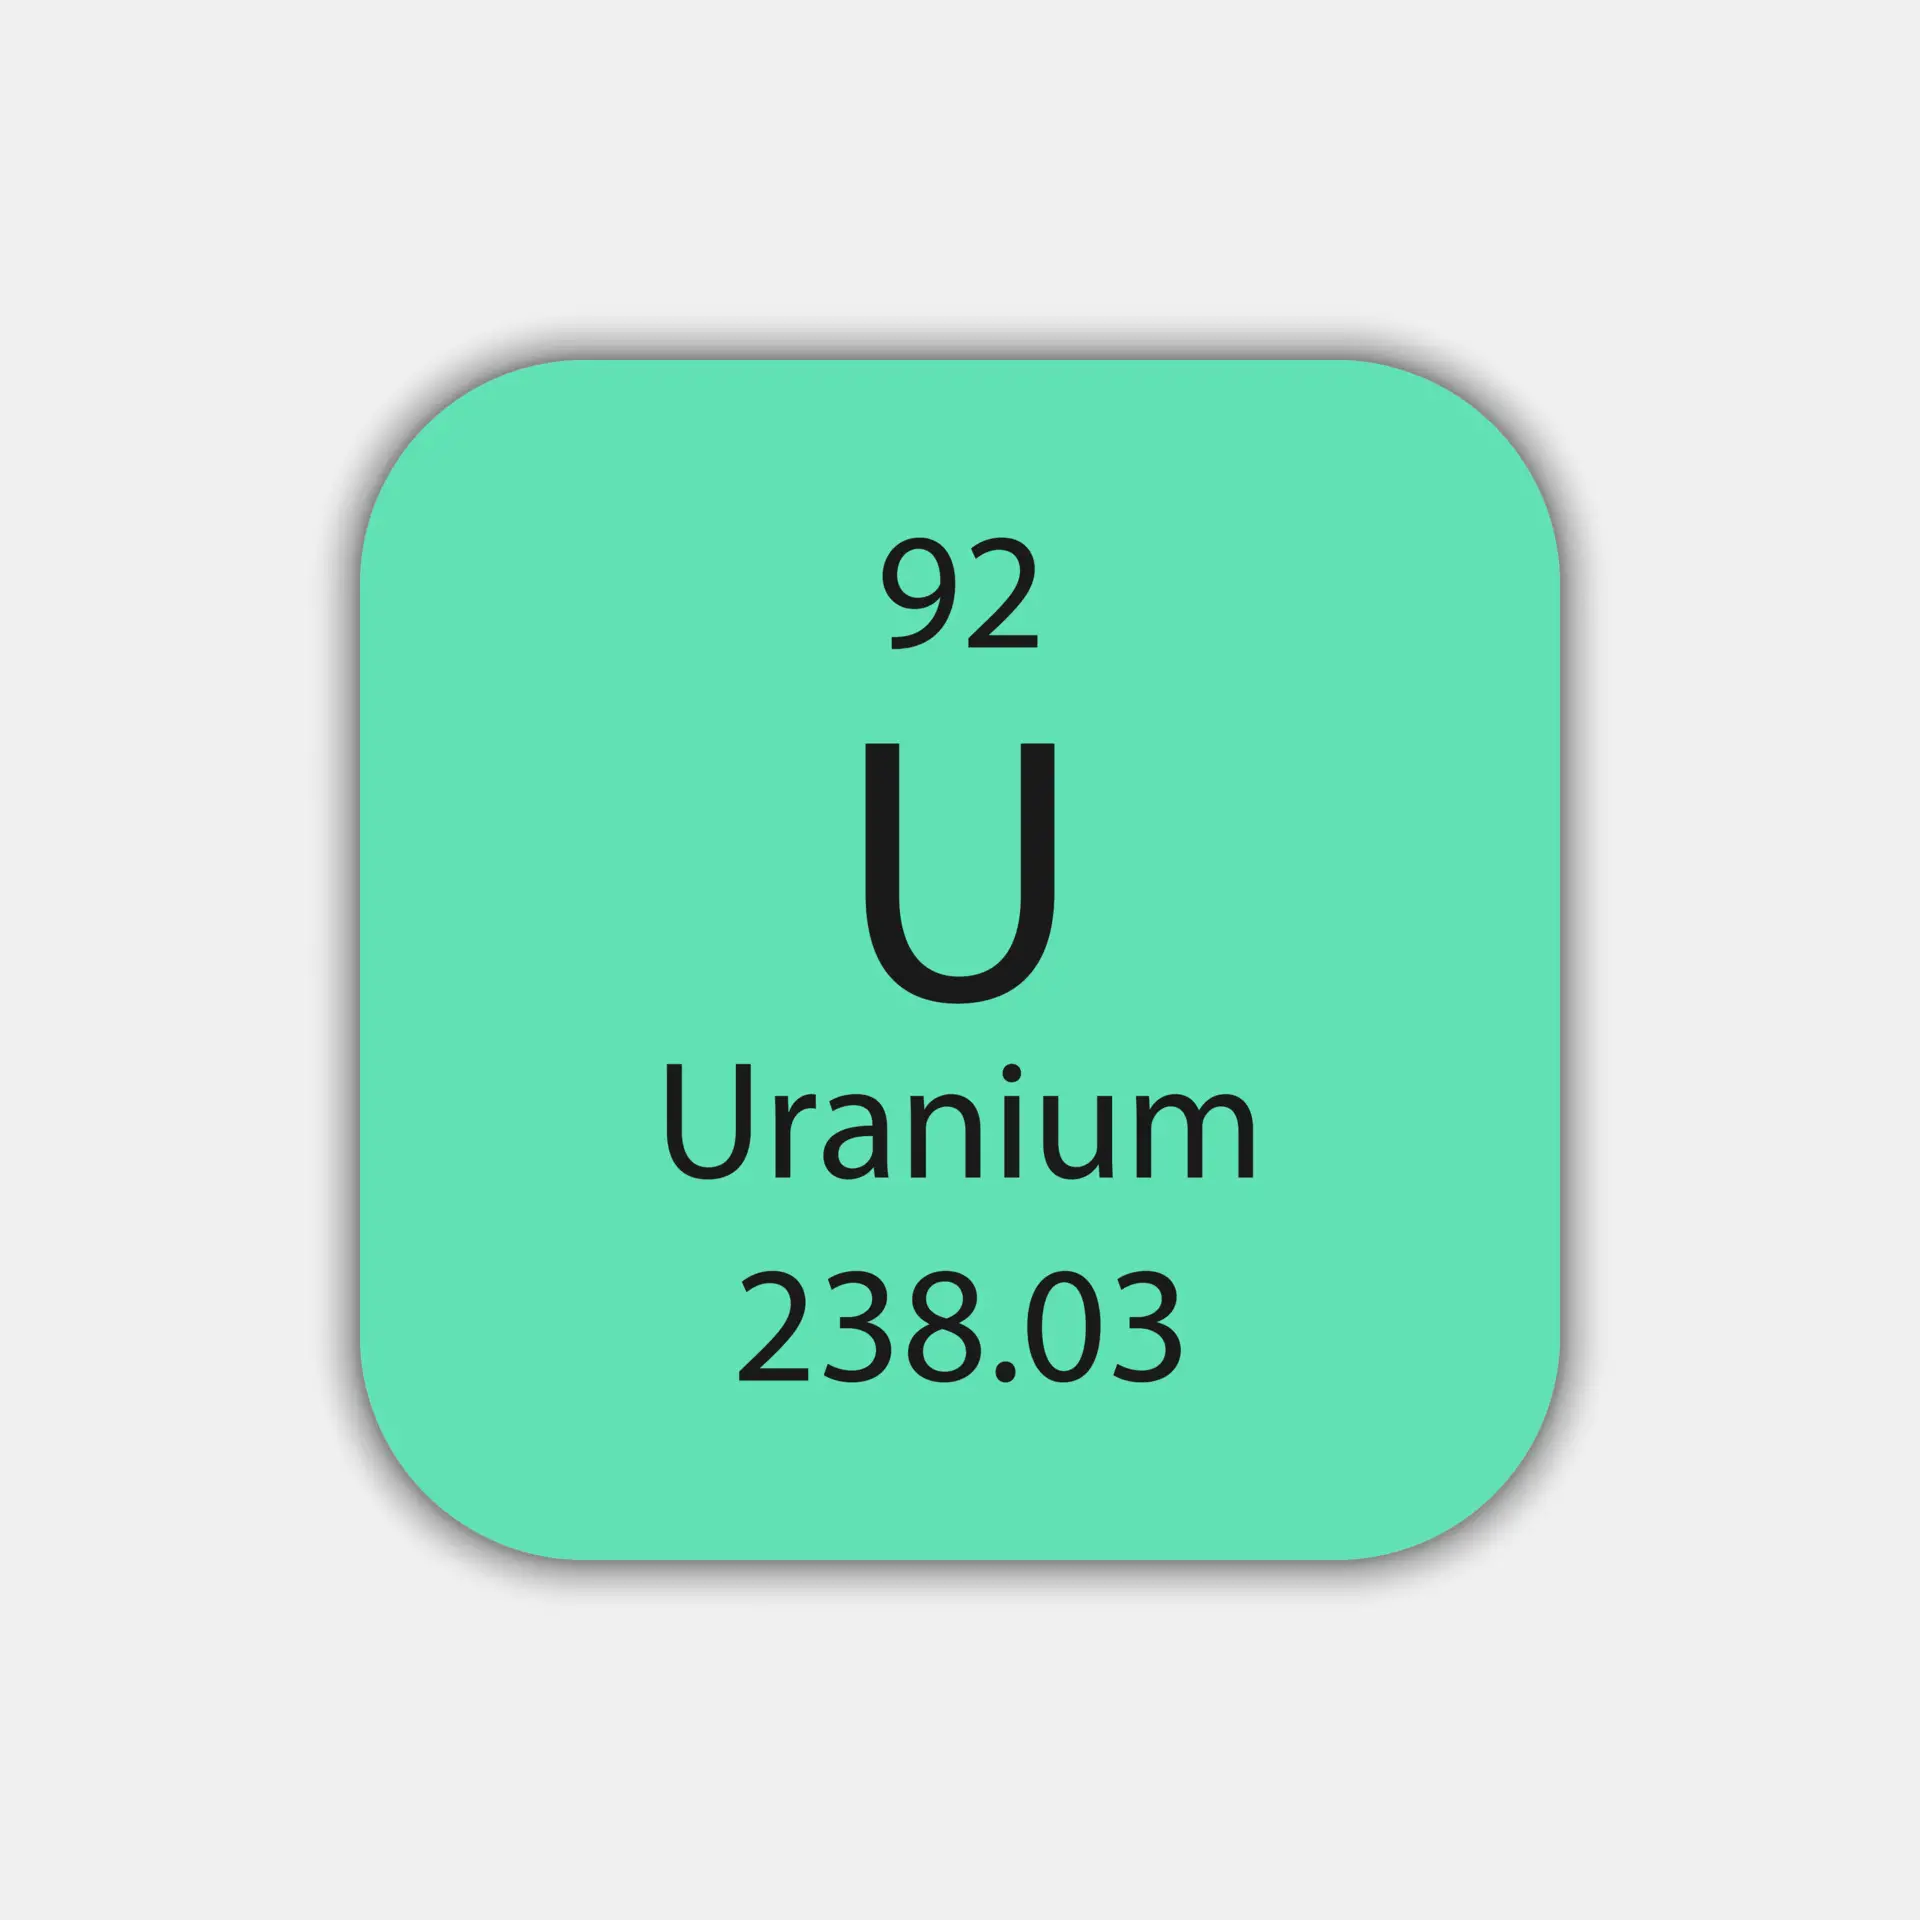 L'uranium : un élément chimique radioactif